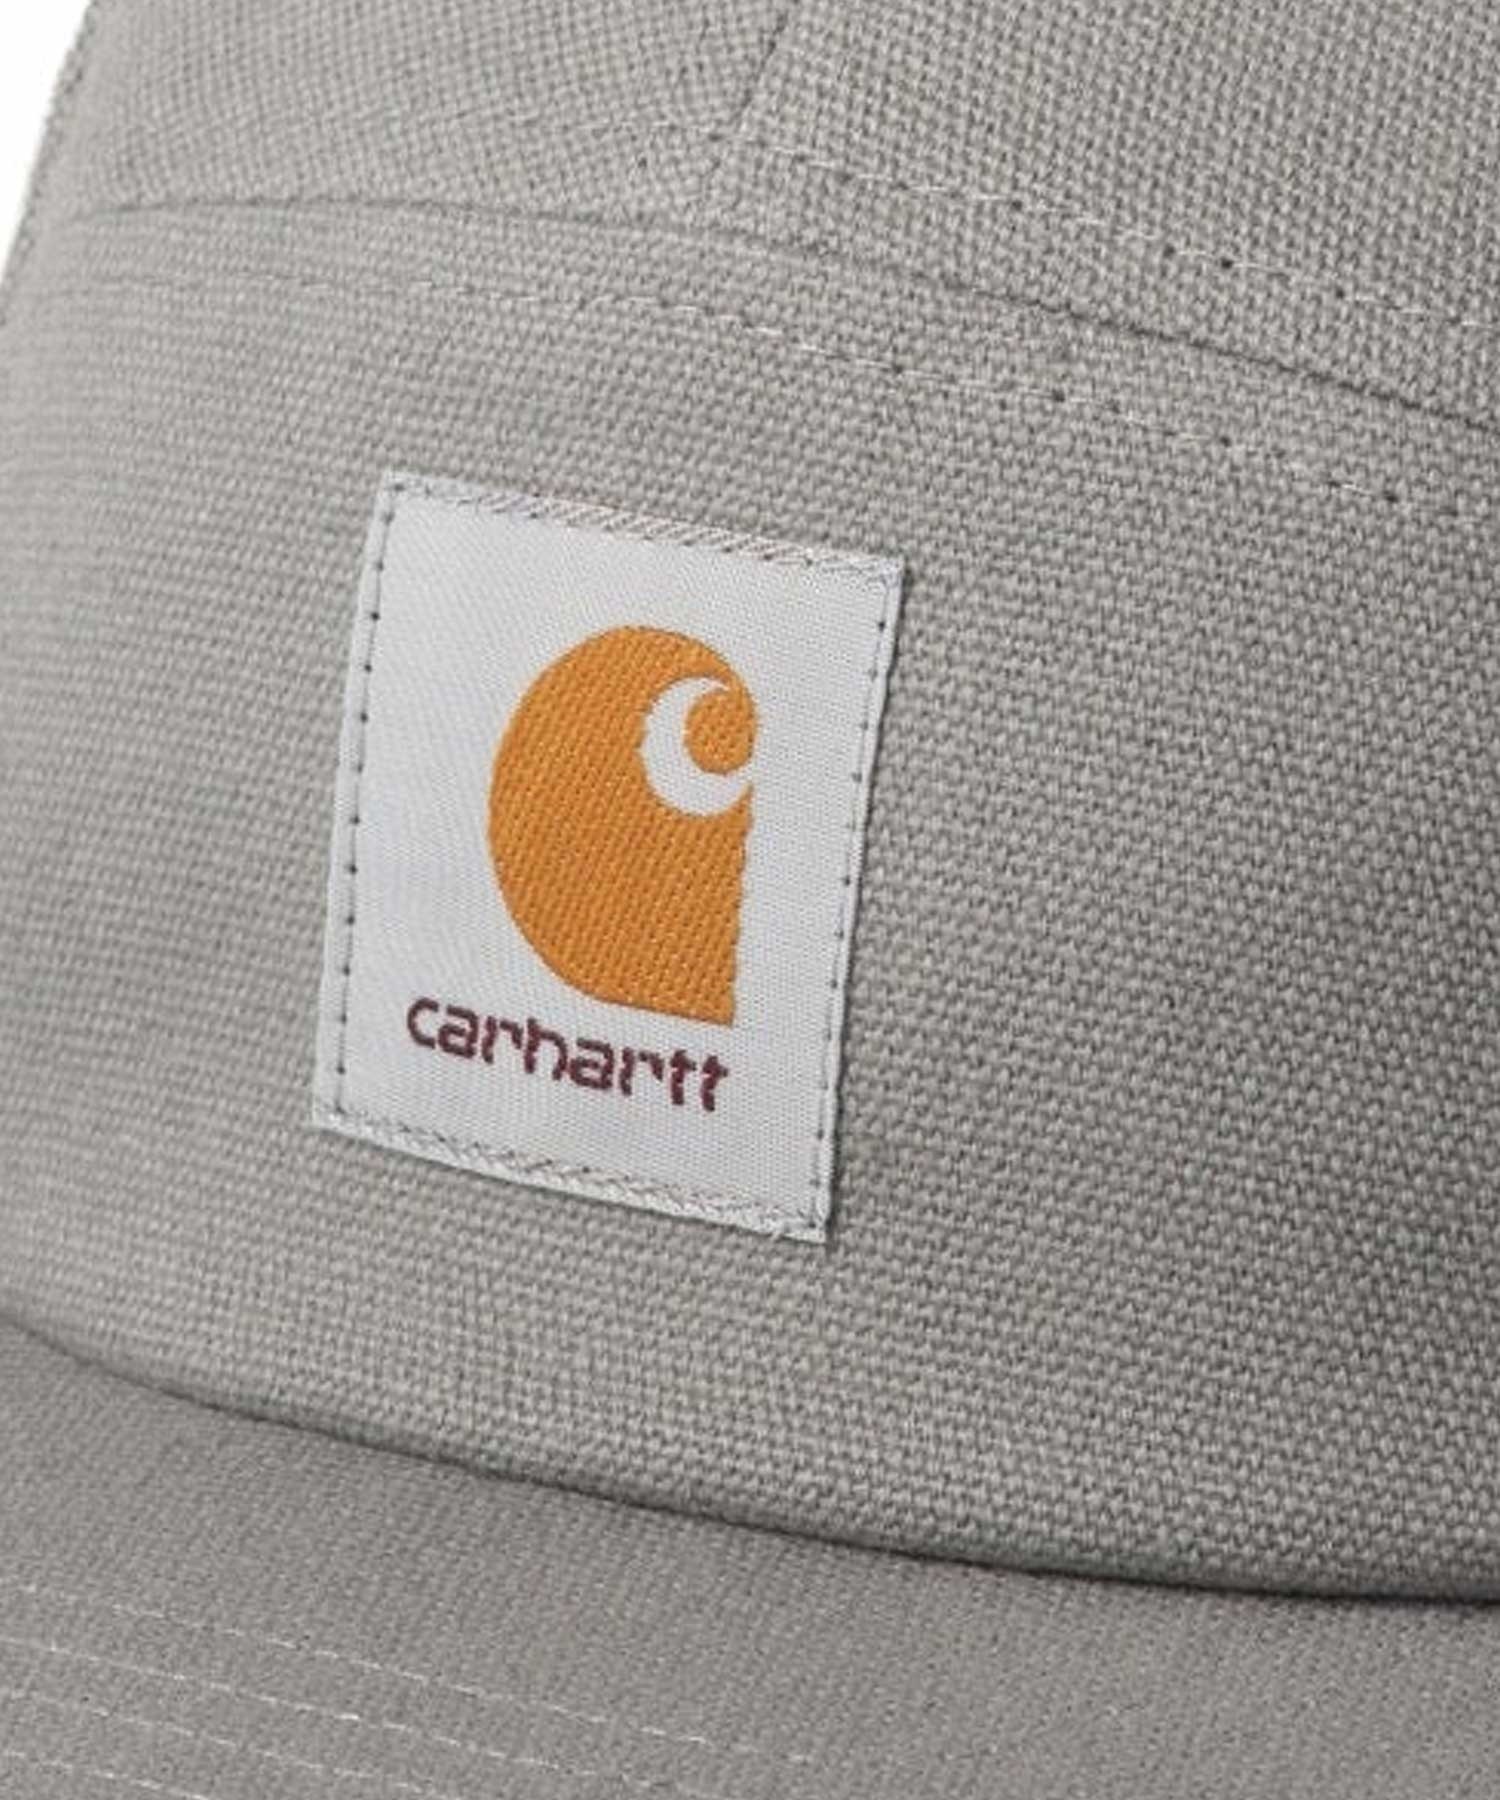 Carhartt WIP/カーハート ダブリューアイピー キャップ BACKLEY CAP I016607(ORE-FREE)